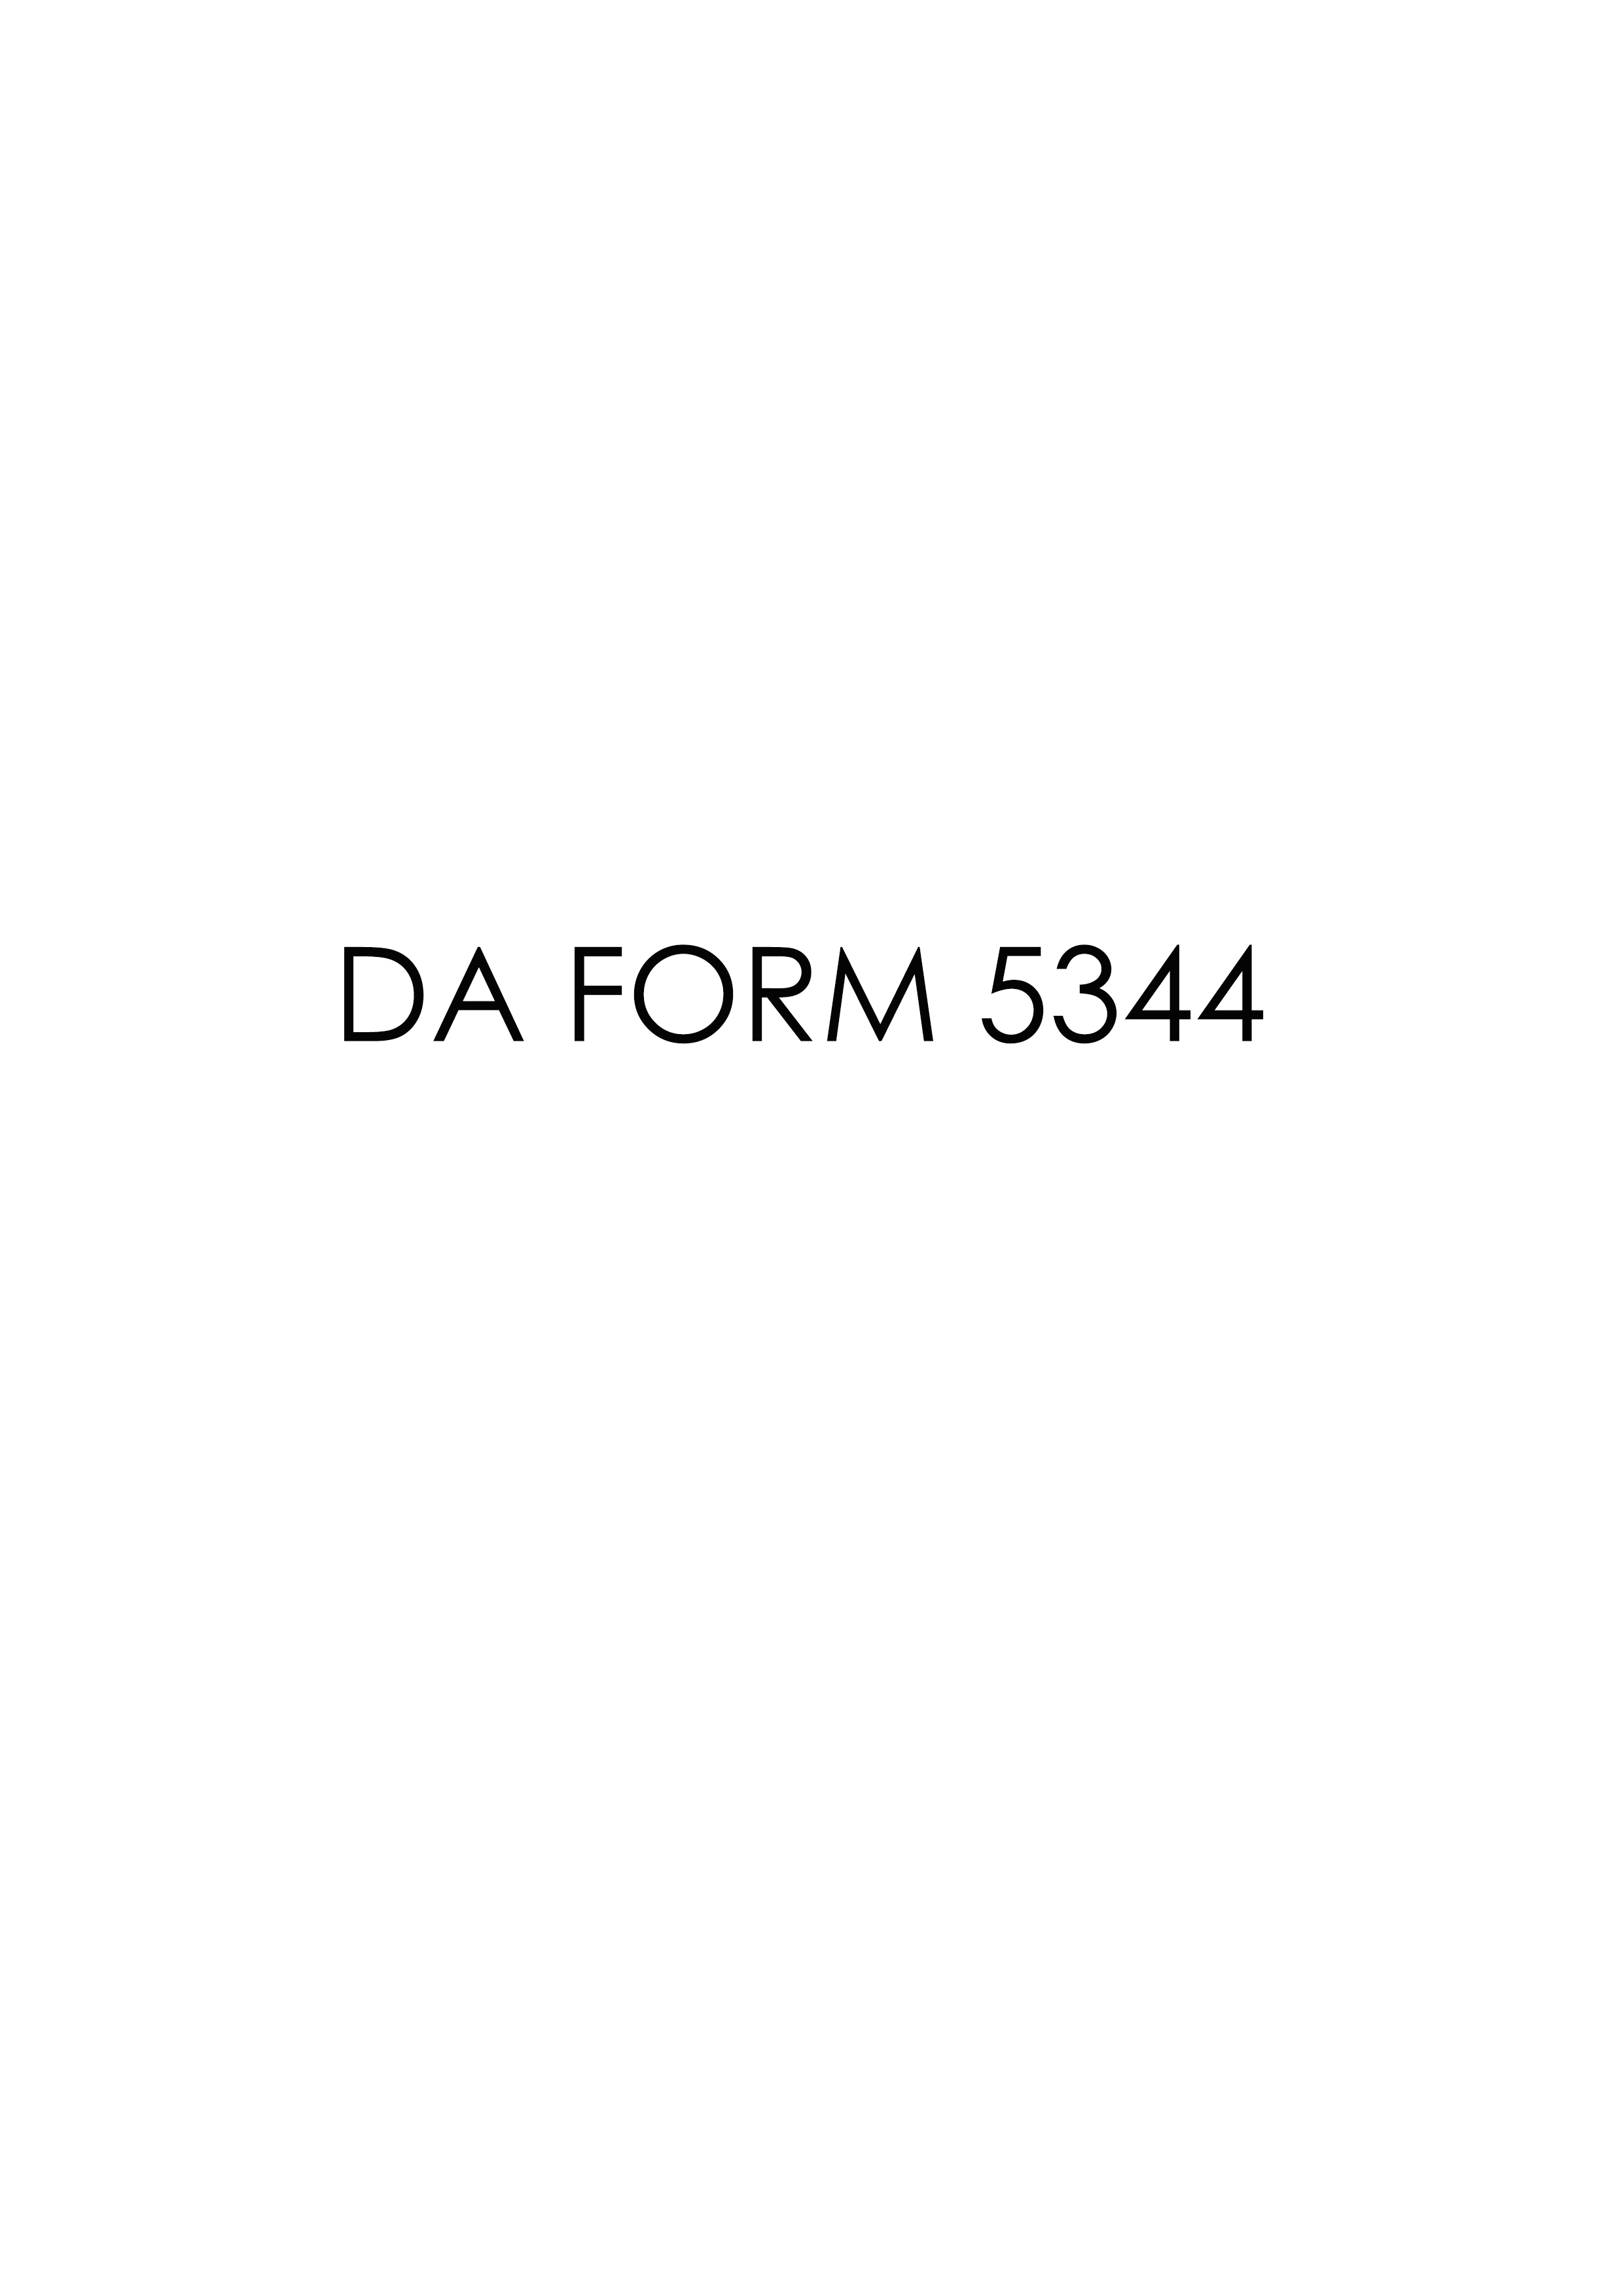 da Form 5344 fillable